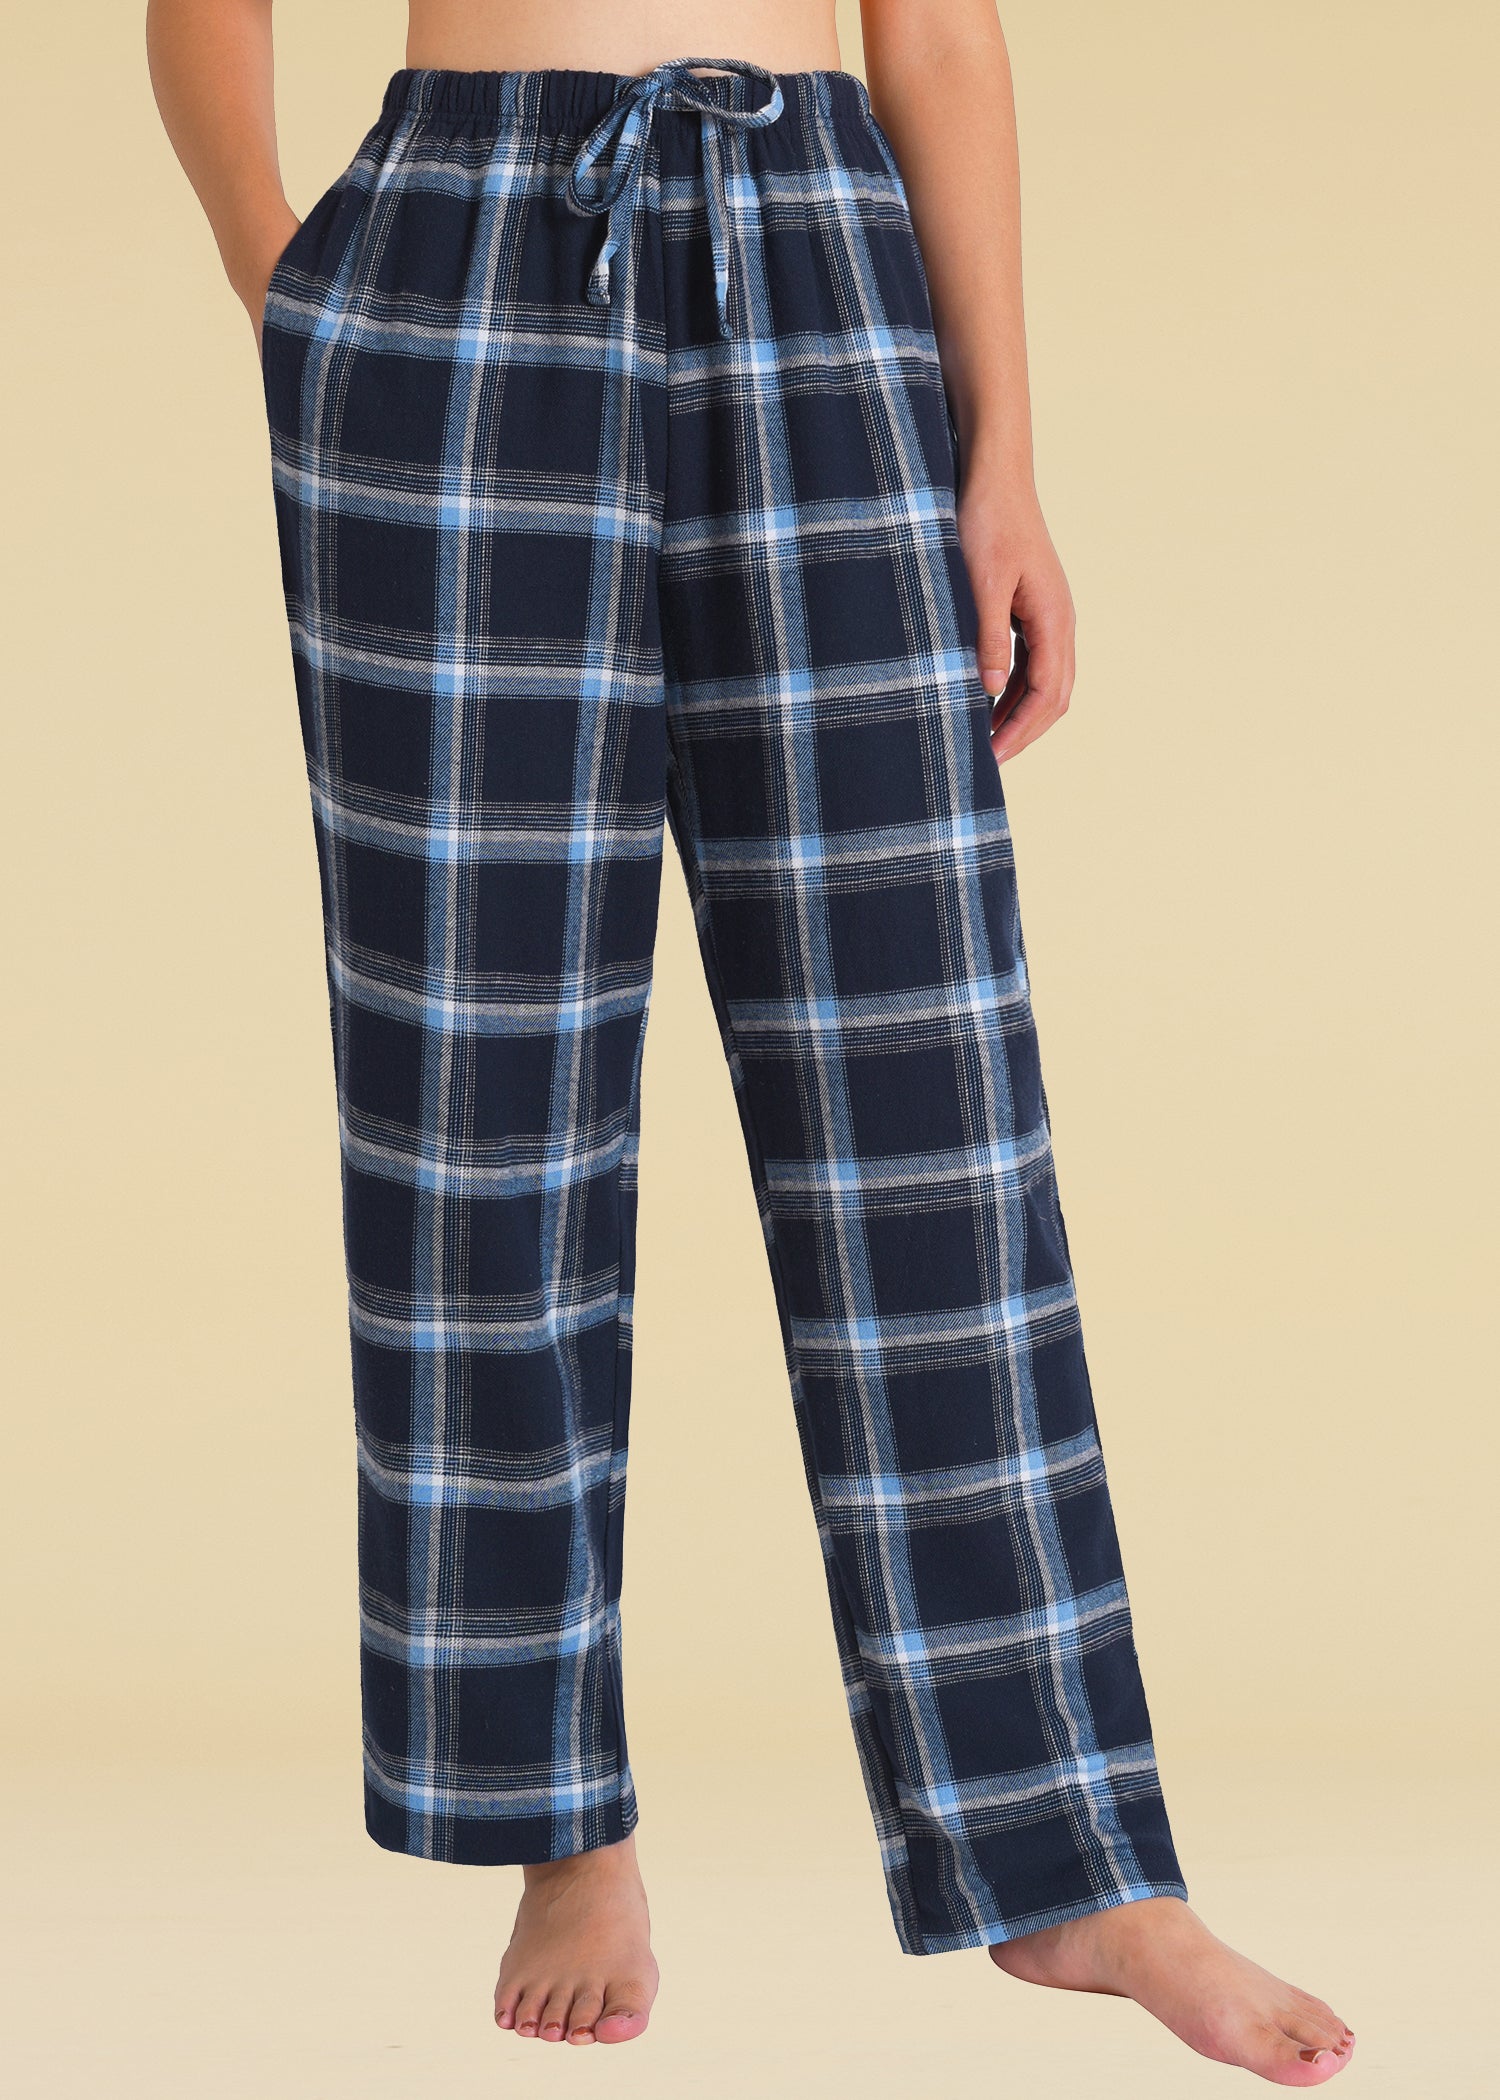 Flannel Pajama Pants - White/blue plaid - Ladies